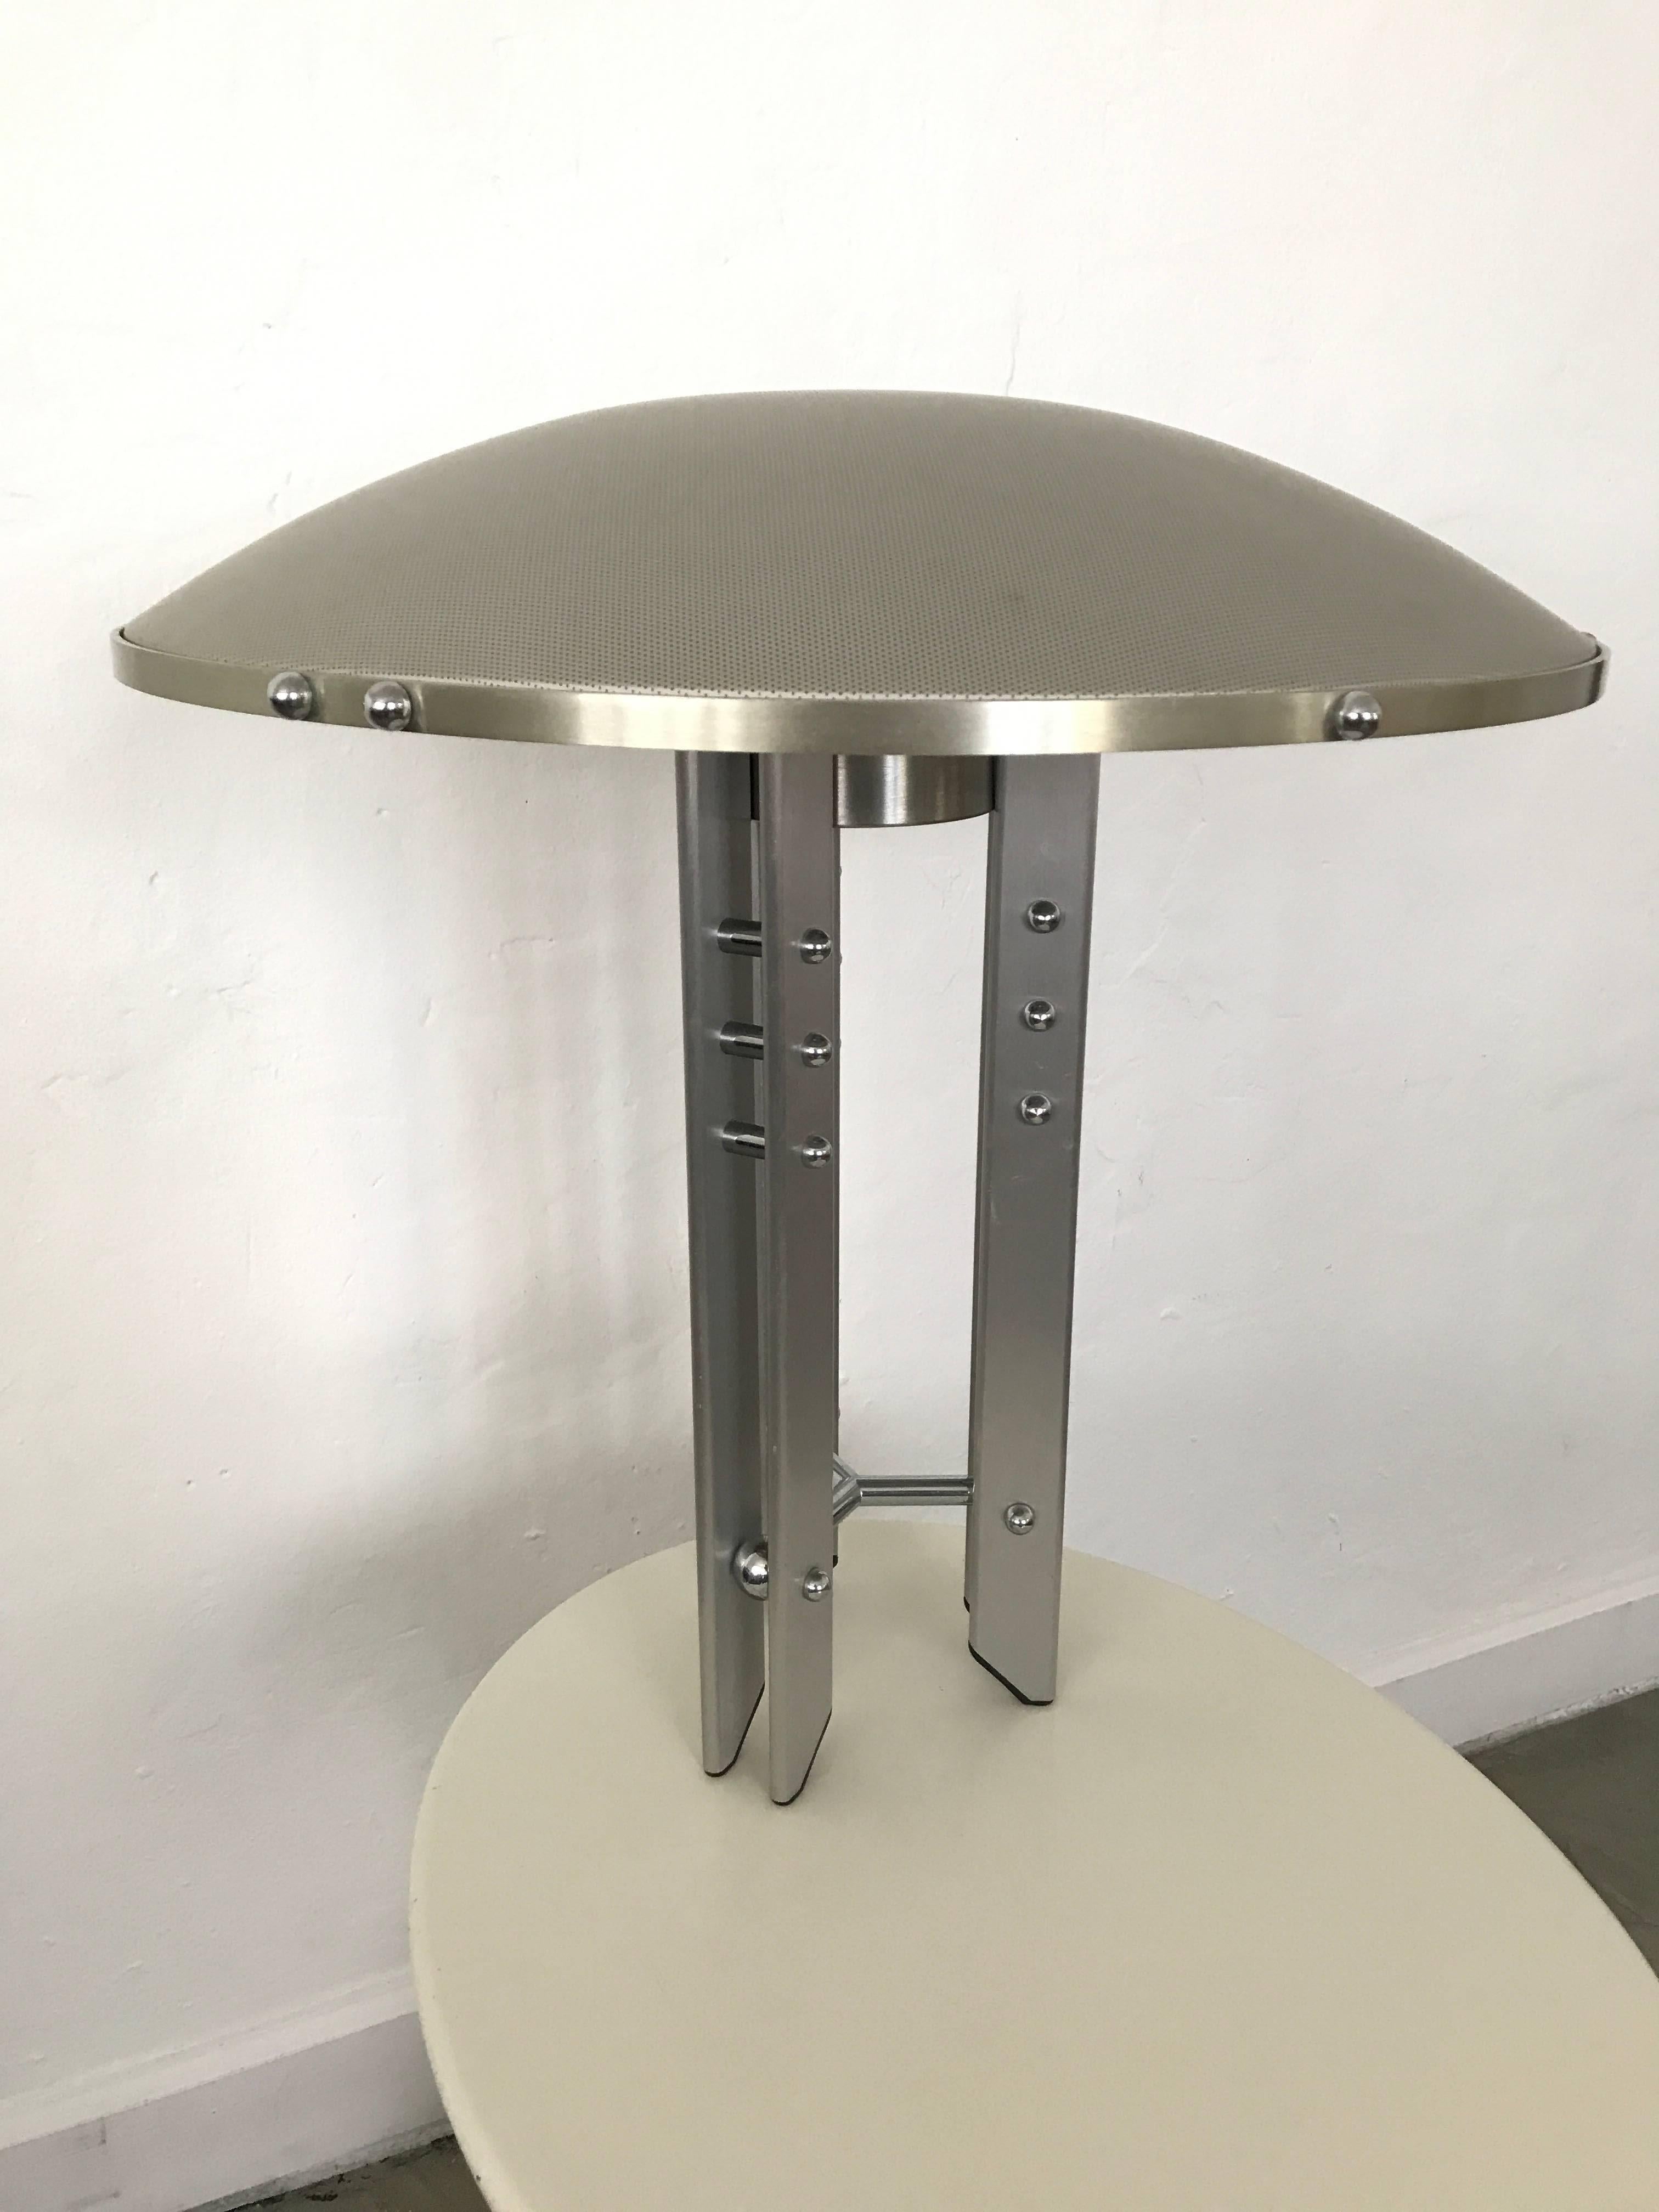 Industrial aluminium and steel table or desk lamp by Robert Sonneman for George Kovacs.